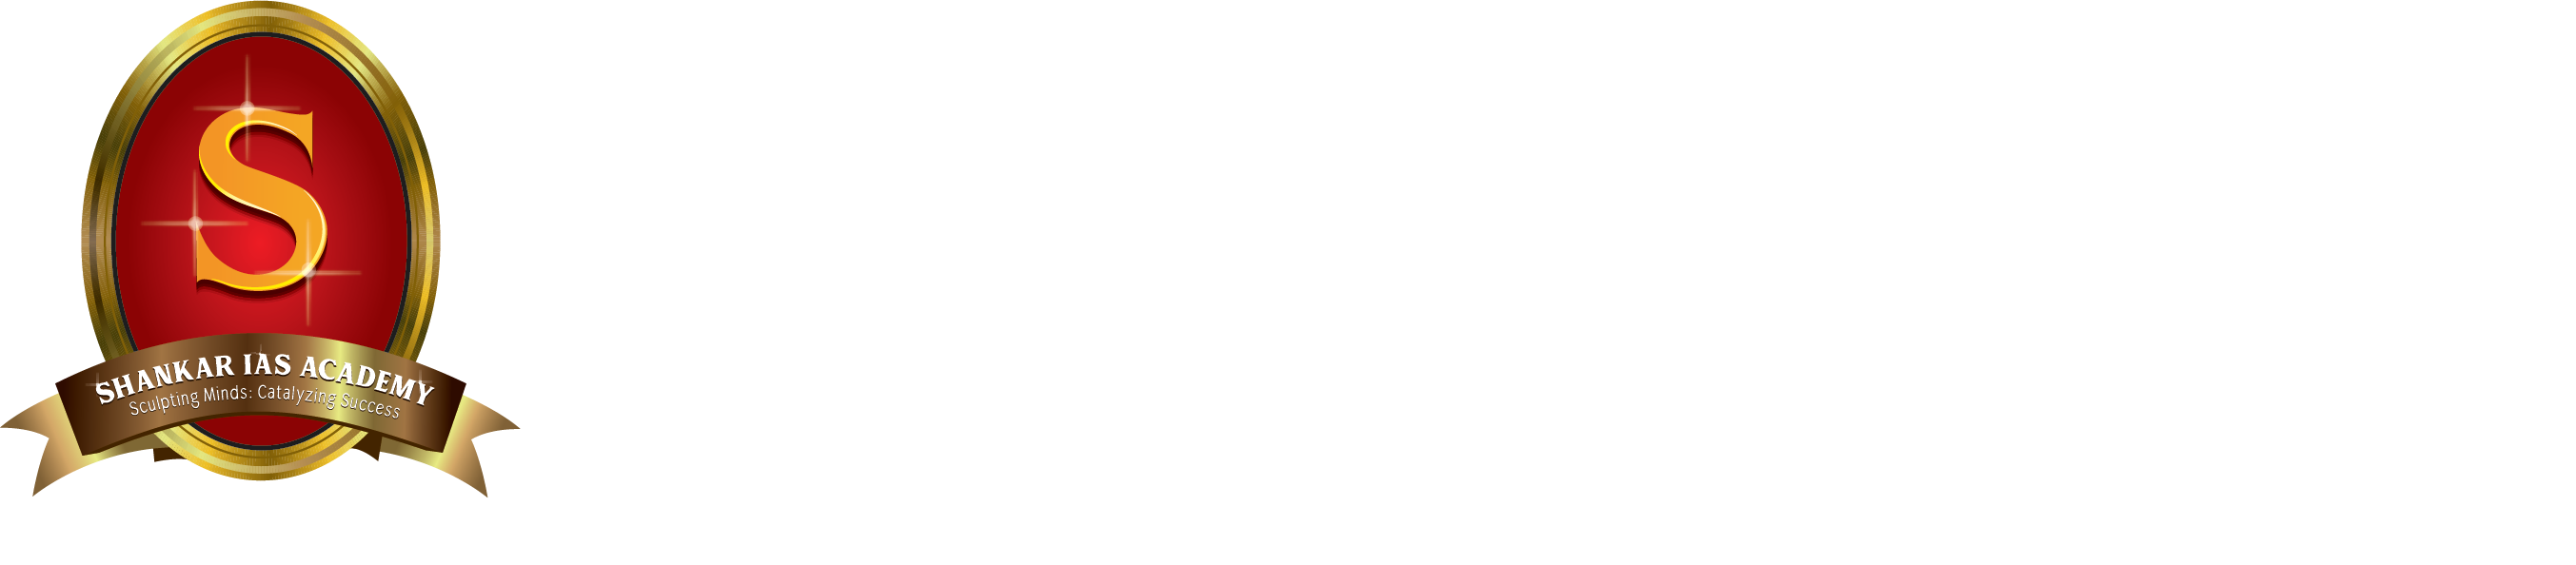 Shankarias academy icon